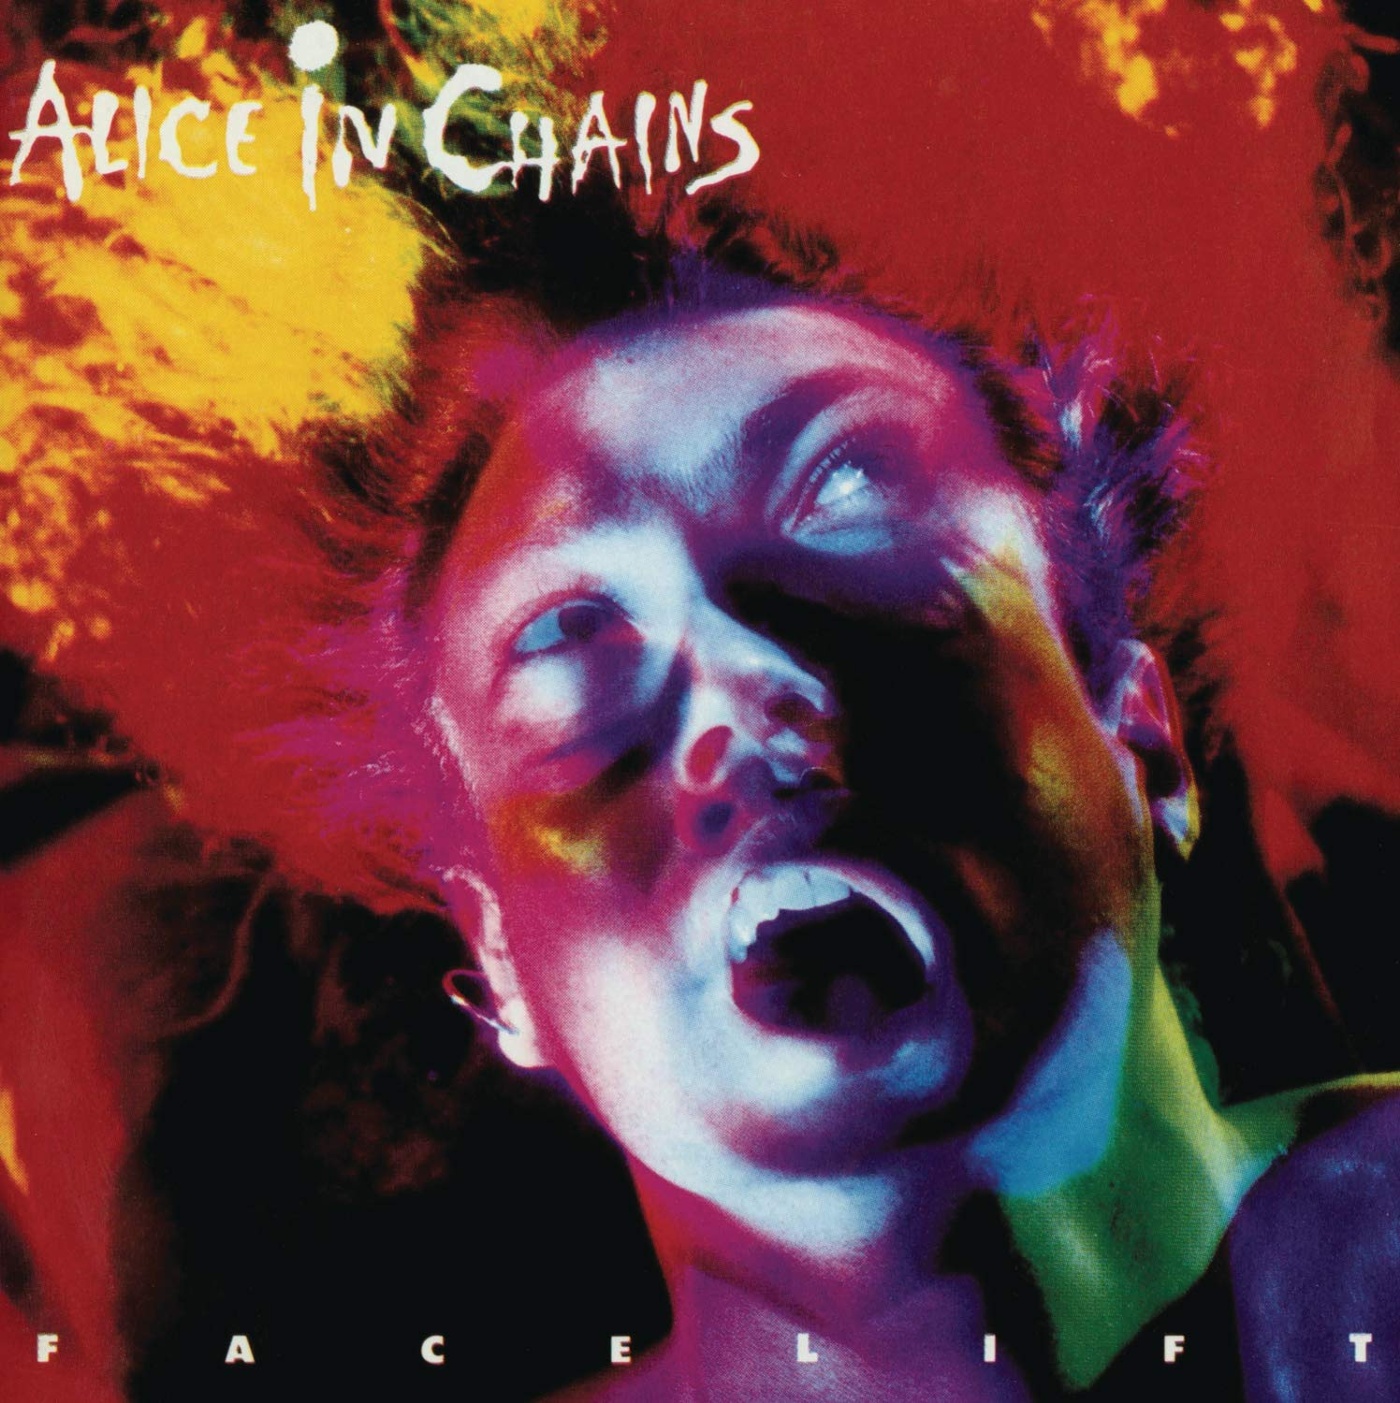 Alice in chains album art